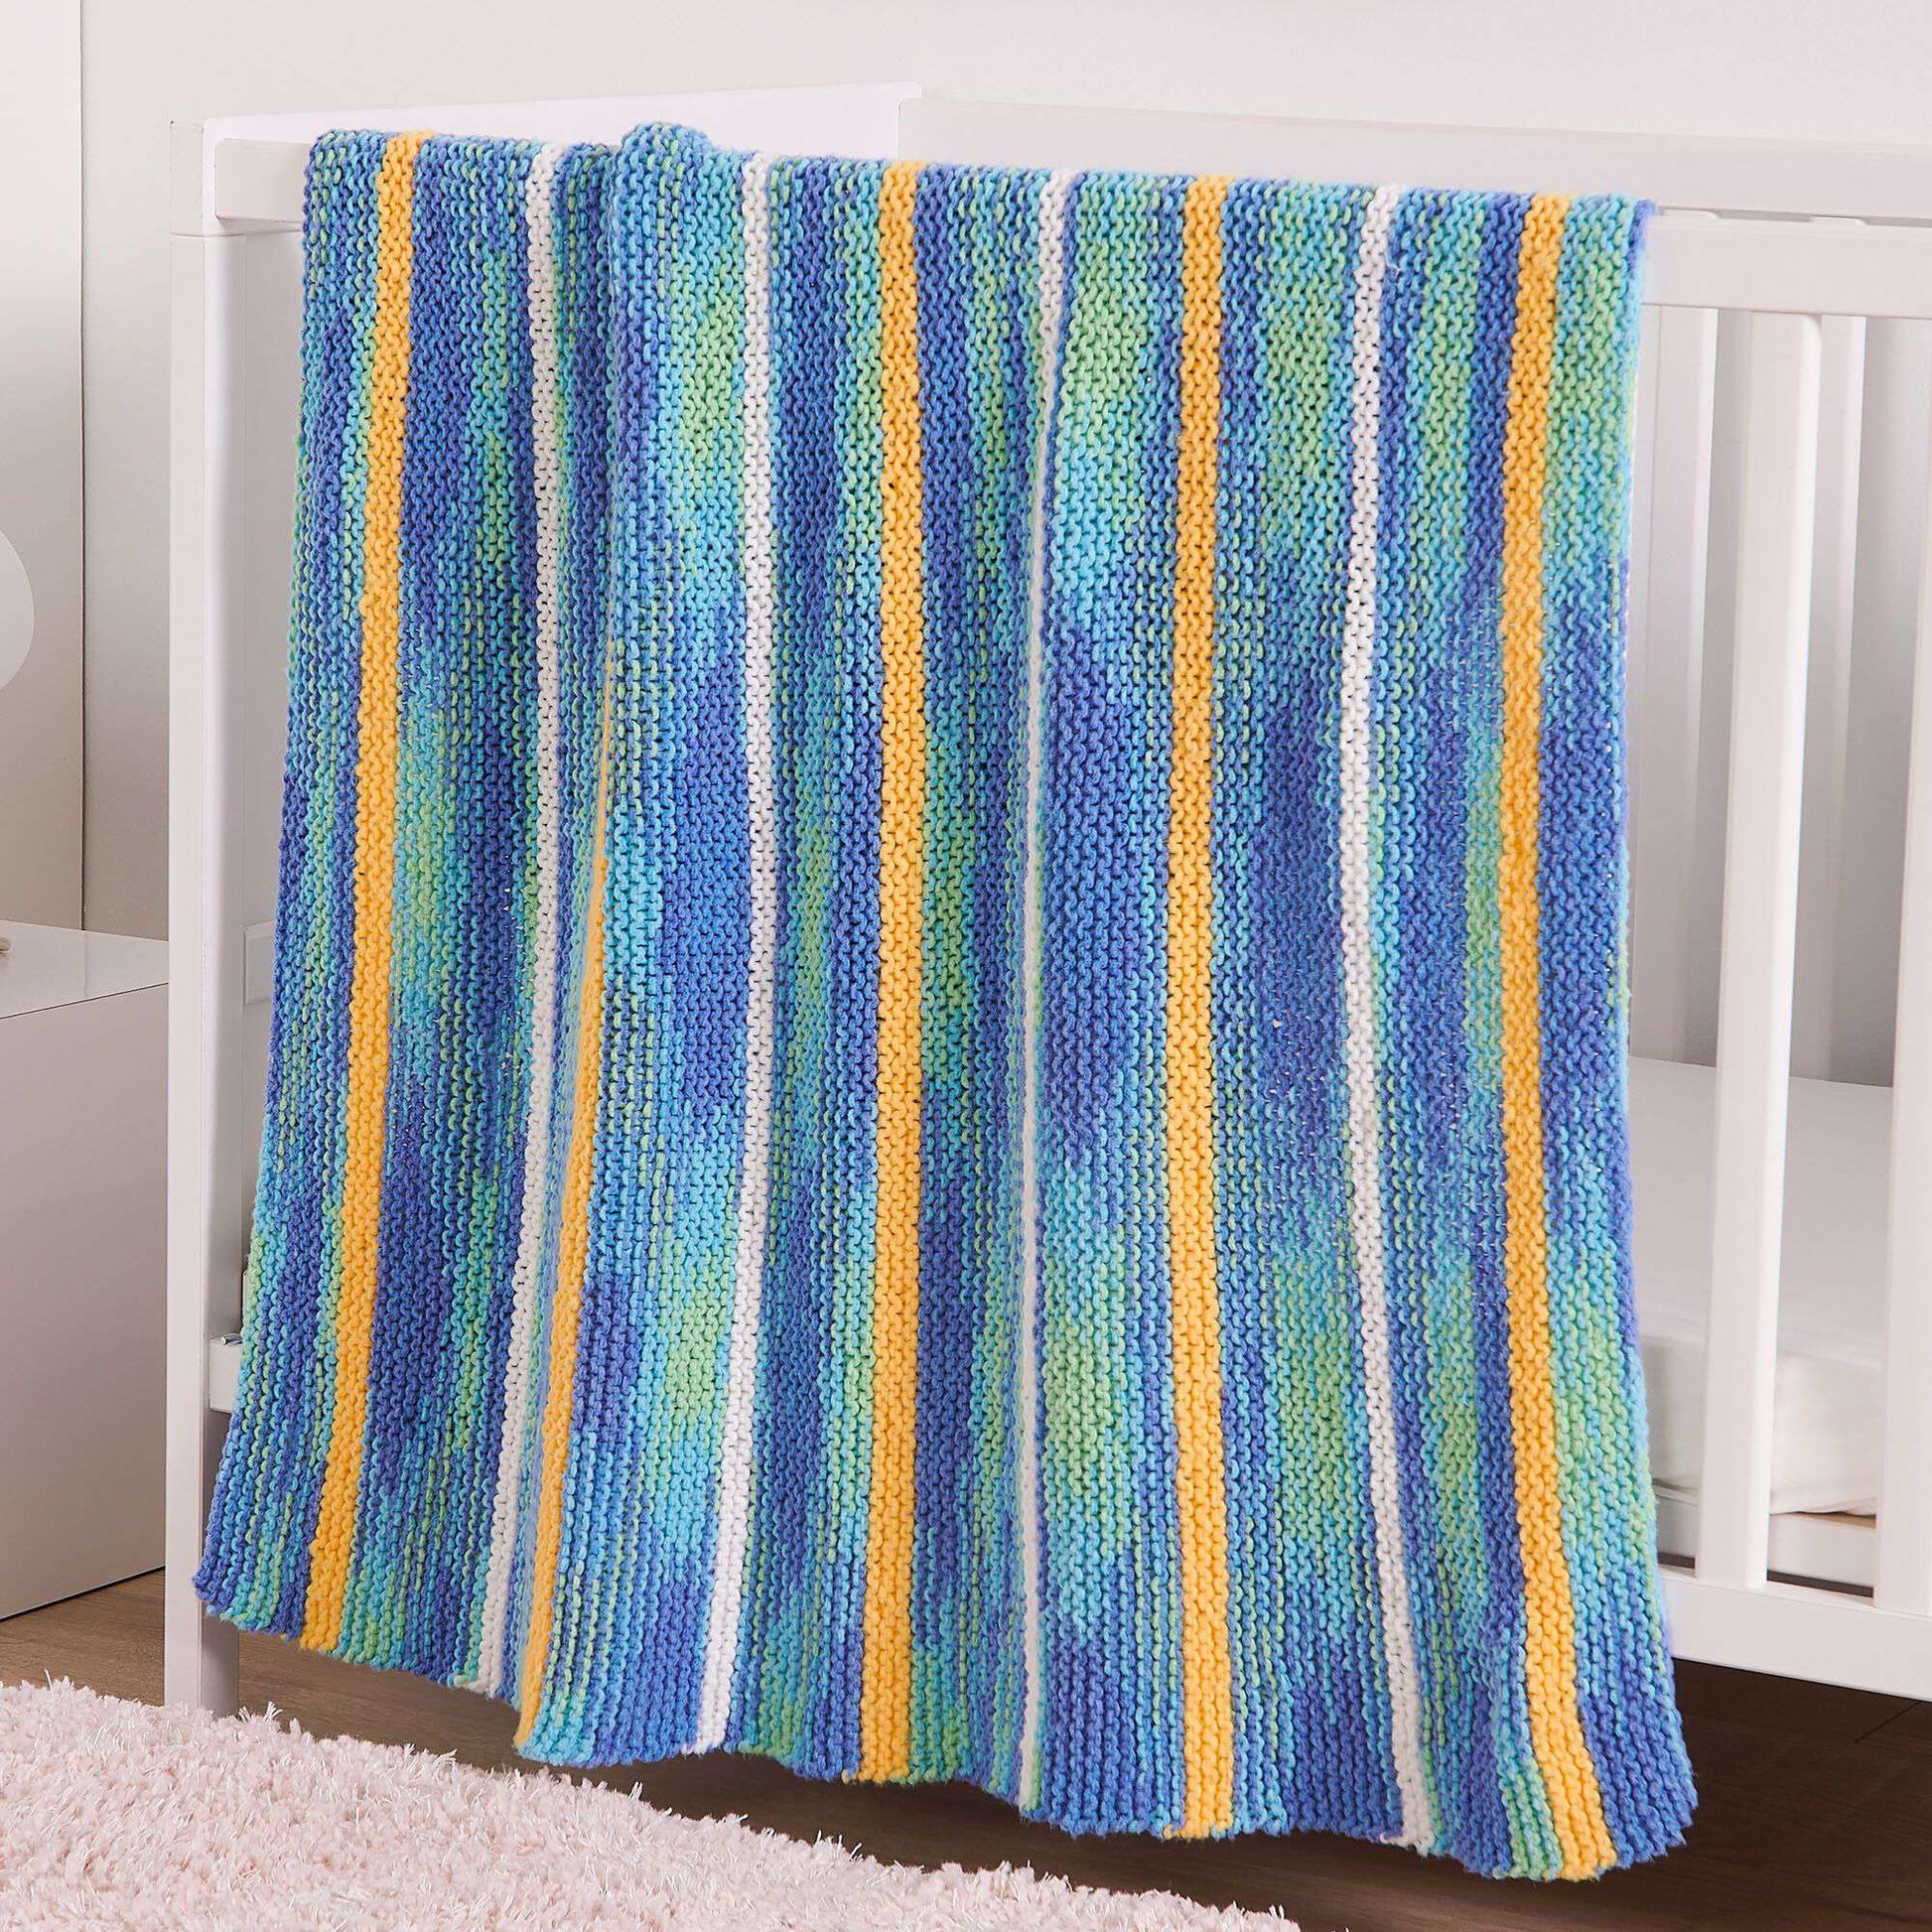 Free Bernat Thick Vs Thin Knit Blanket Pattern